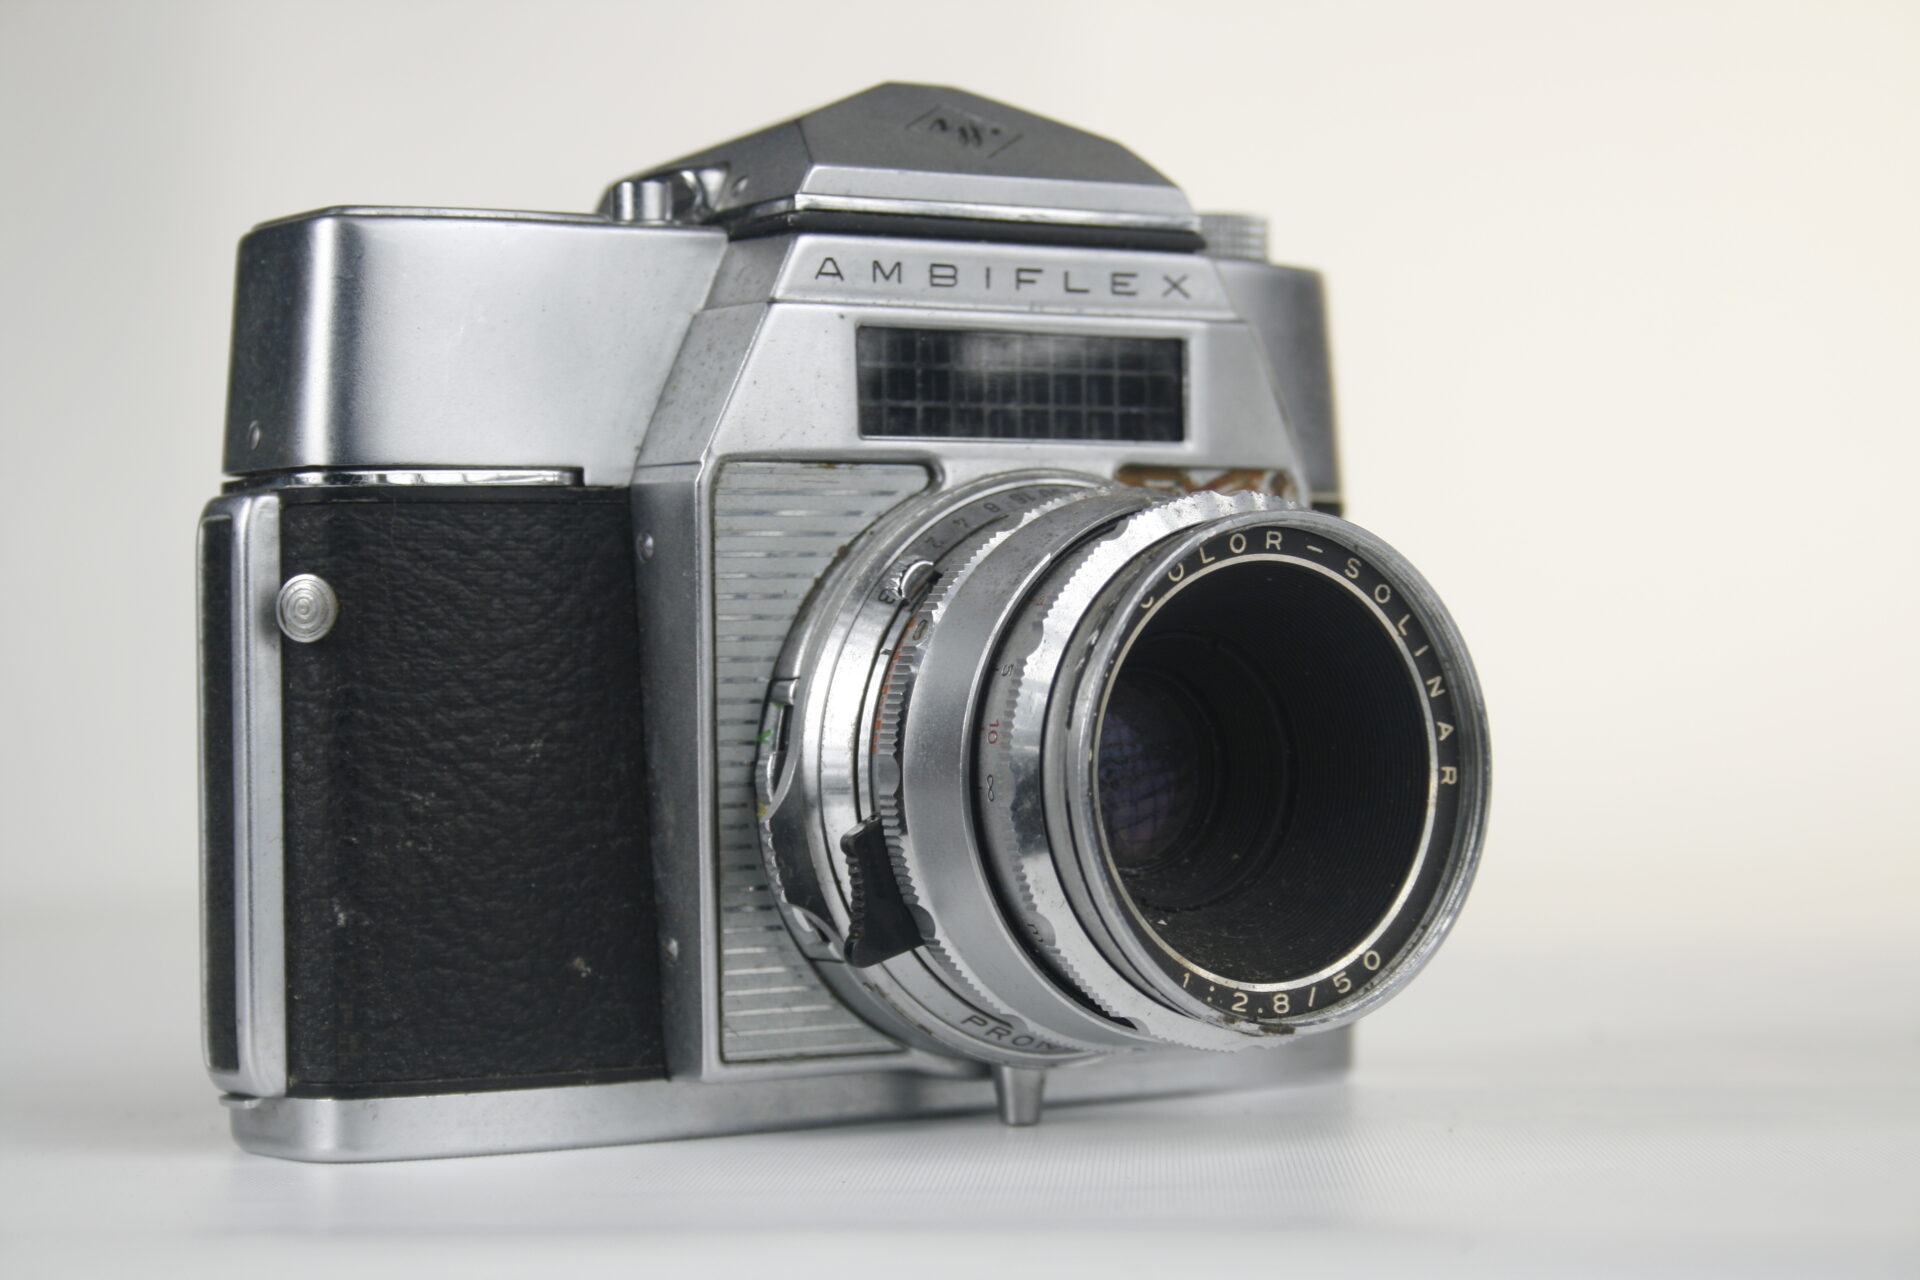 Agfa AmbifIex. 35mm SLR camera. 1960. Duitsland.